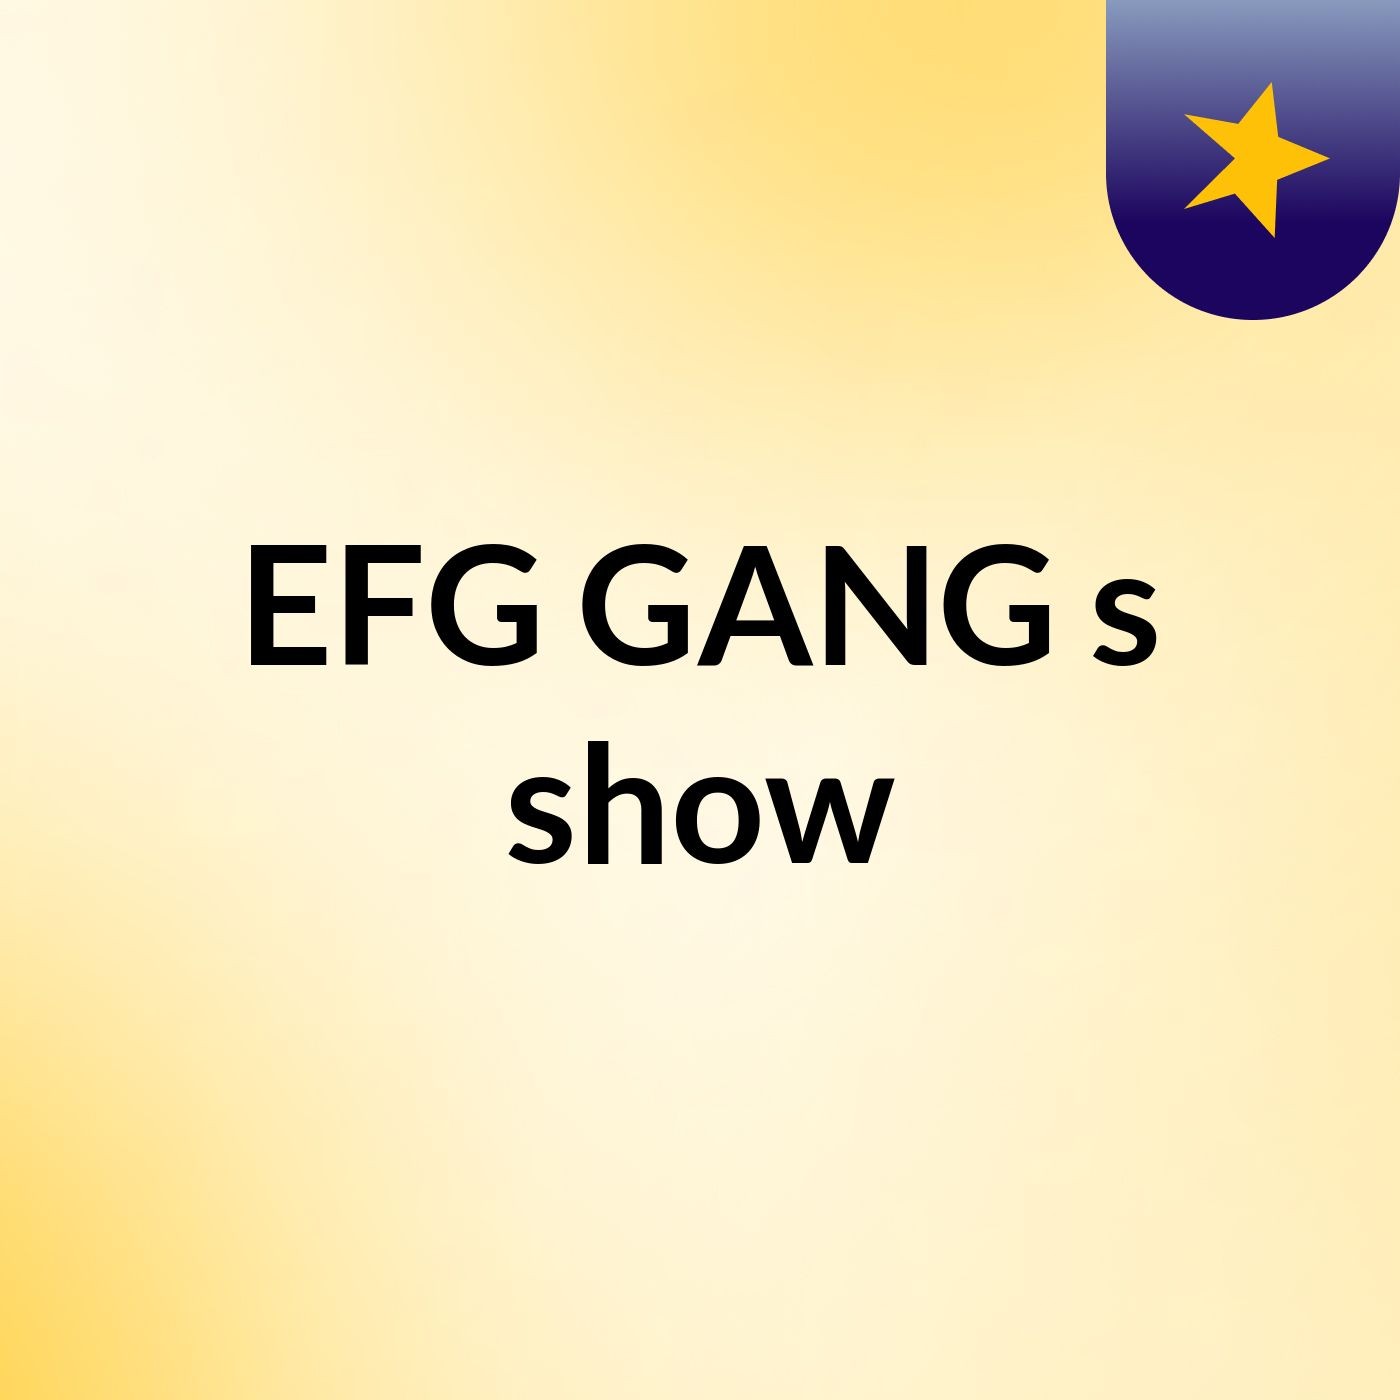 EFG GANG's show